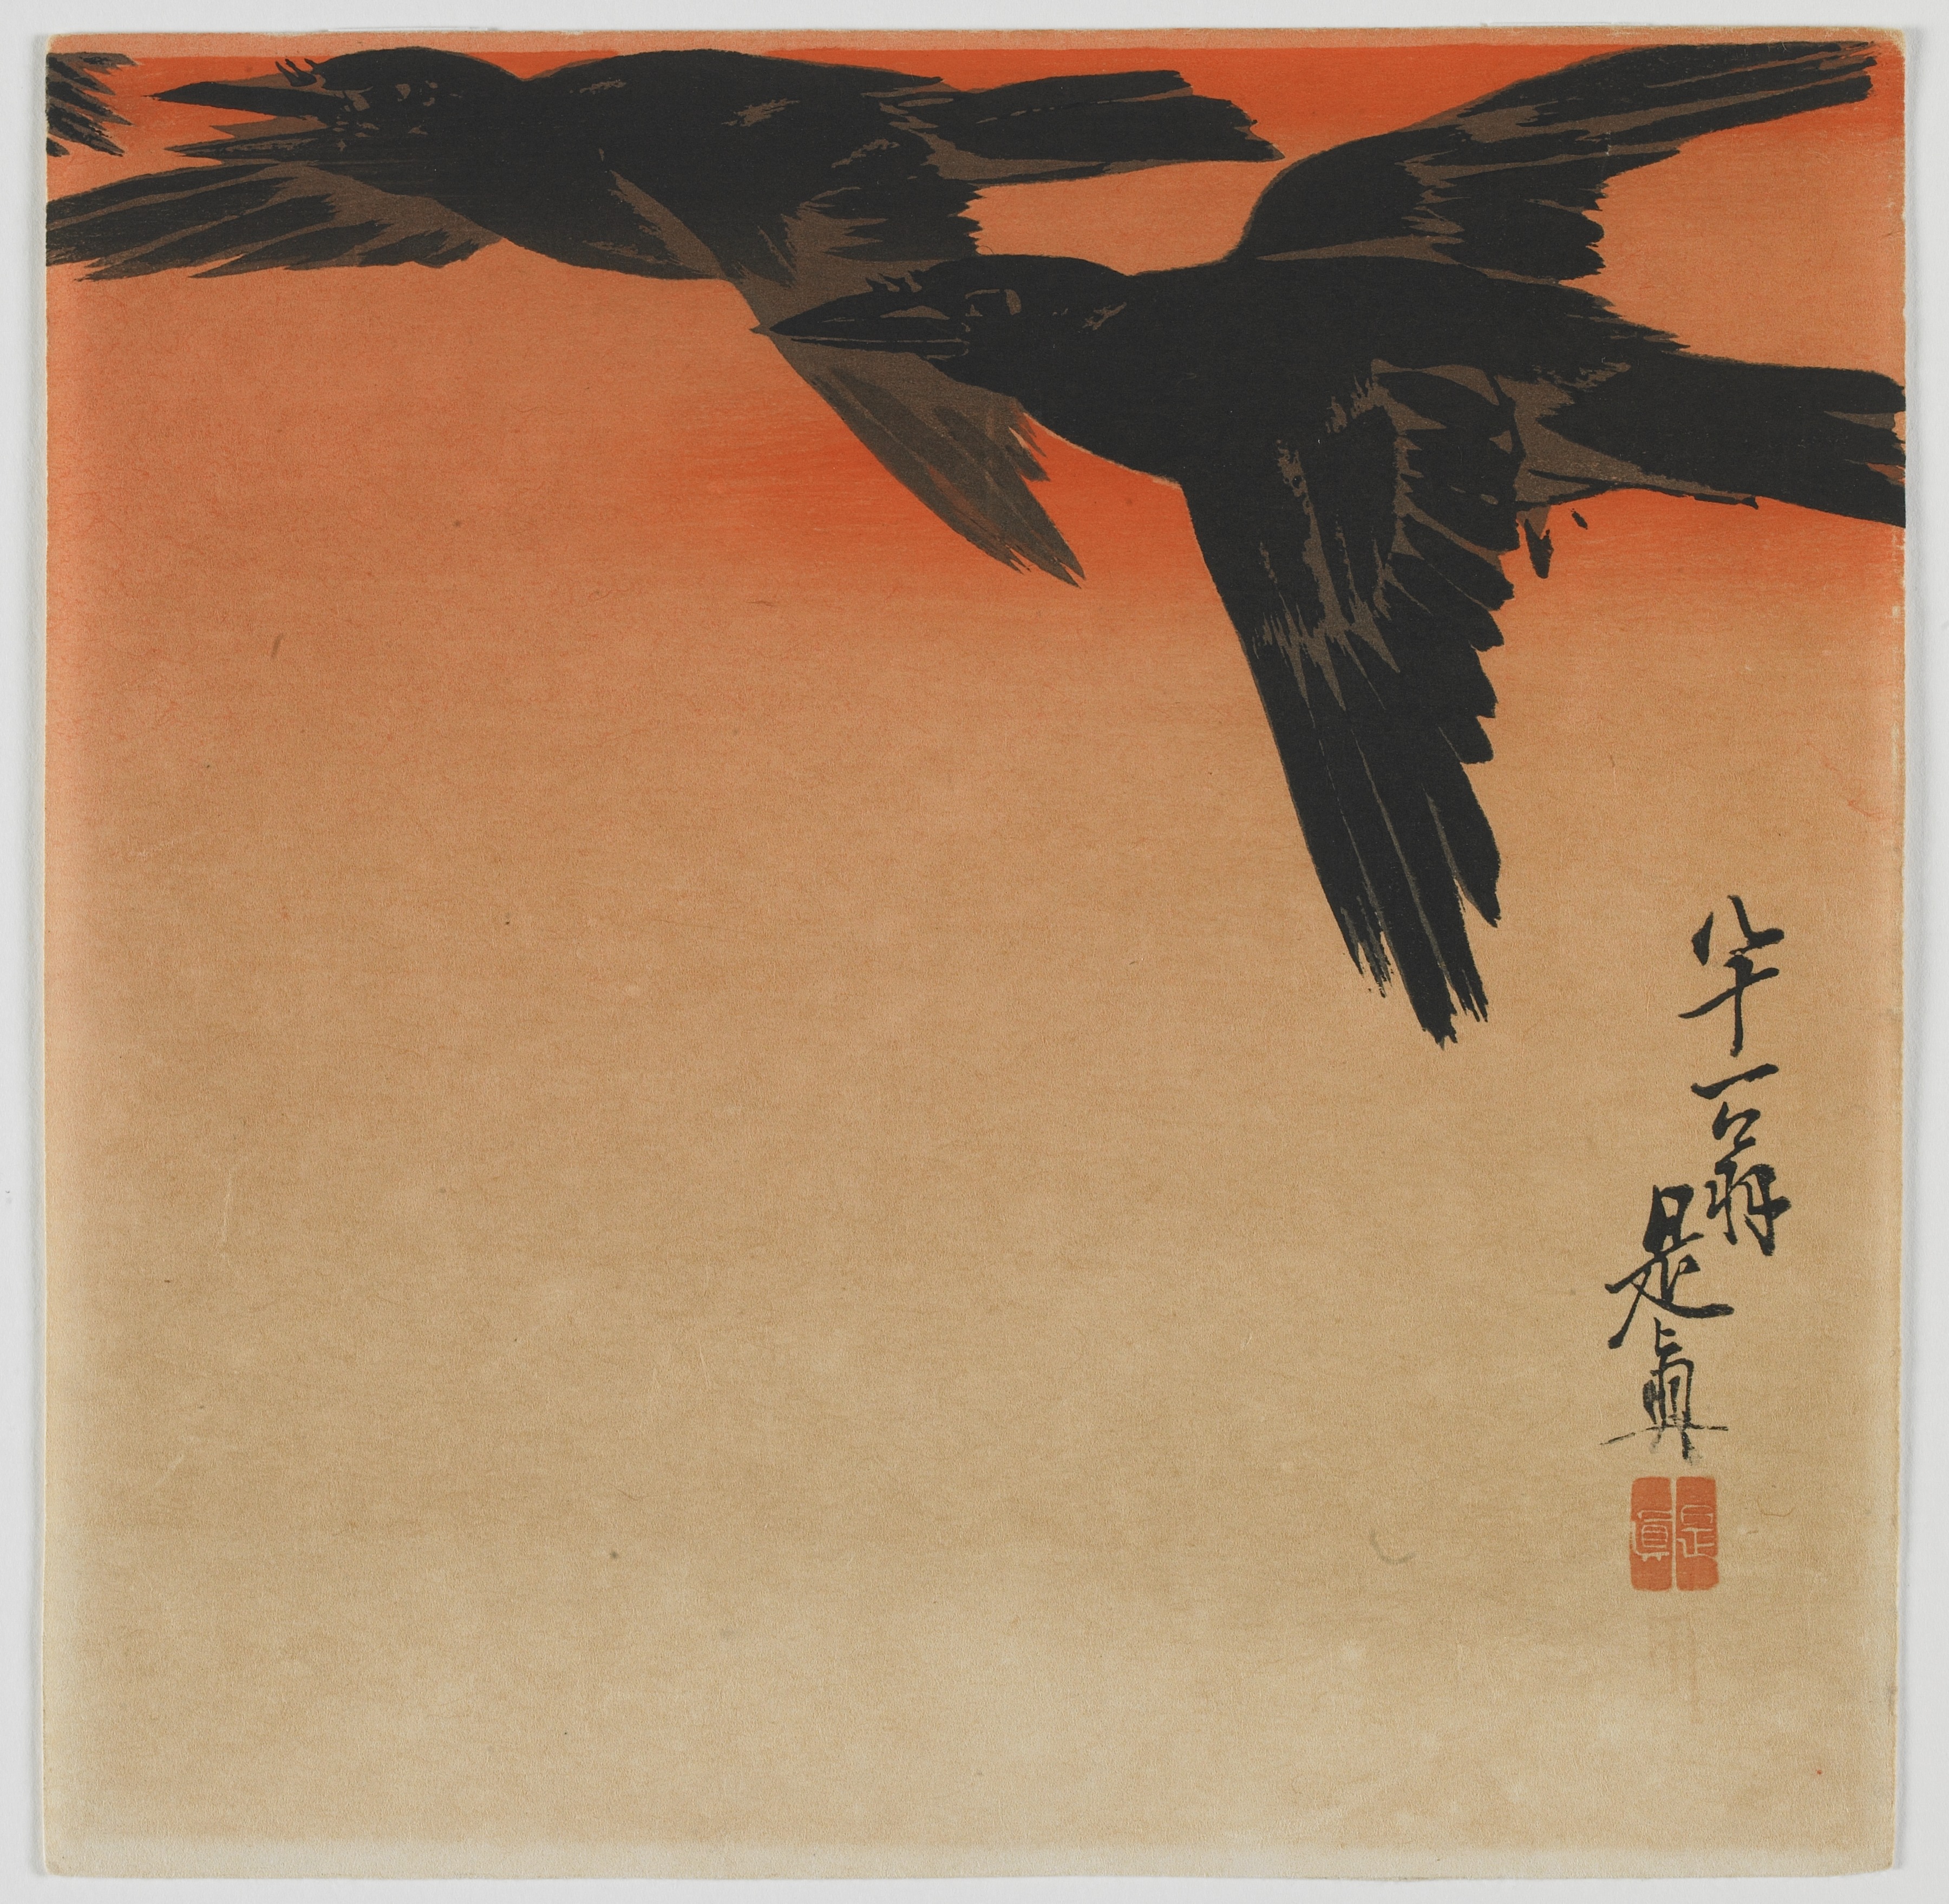 Alacakaranlıkta Kargalar by Shibata Zeshin - 19.yüzyılın sonları - 23.8 x 23.9 cm 